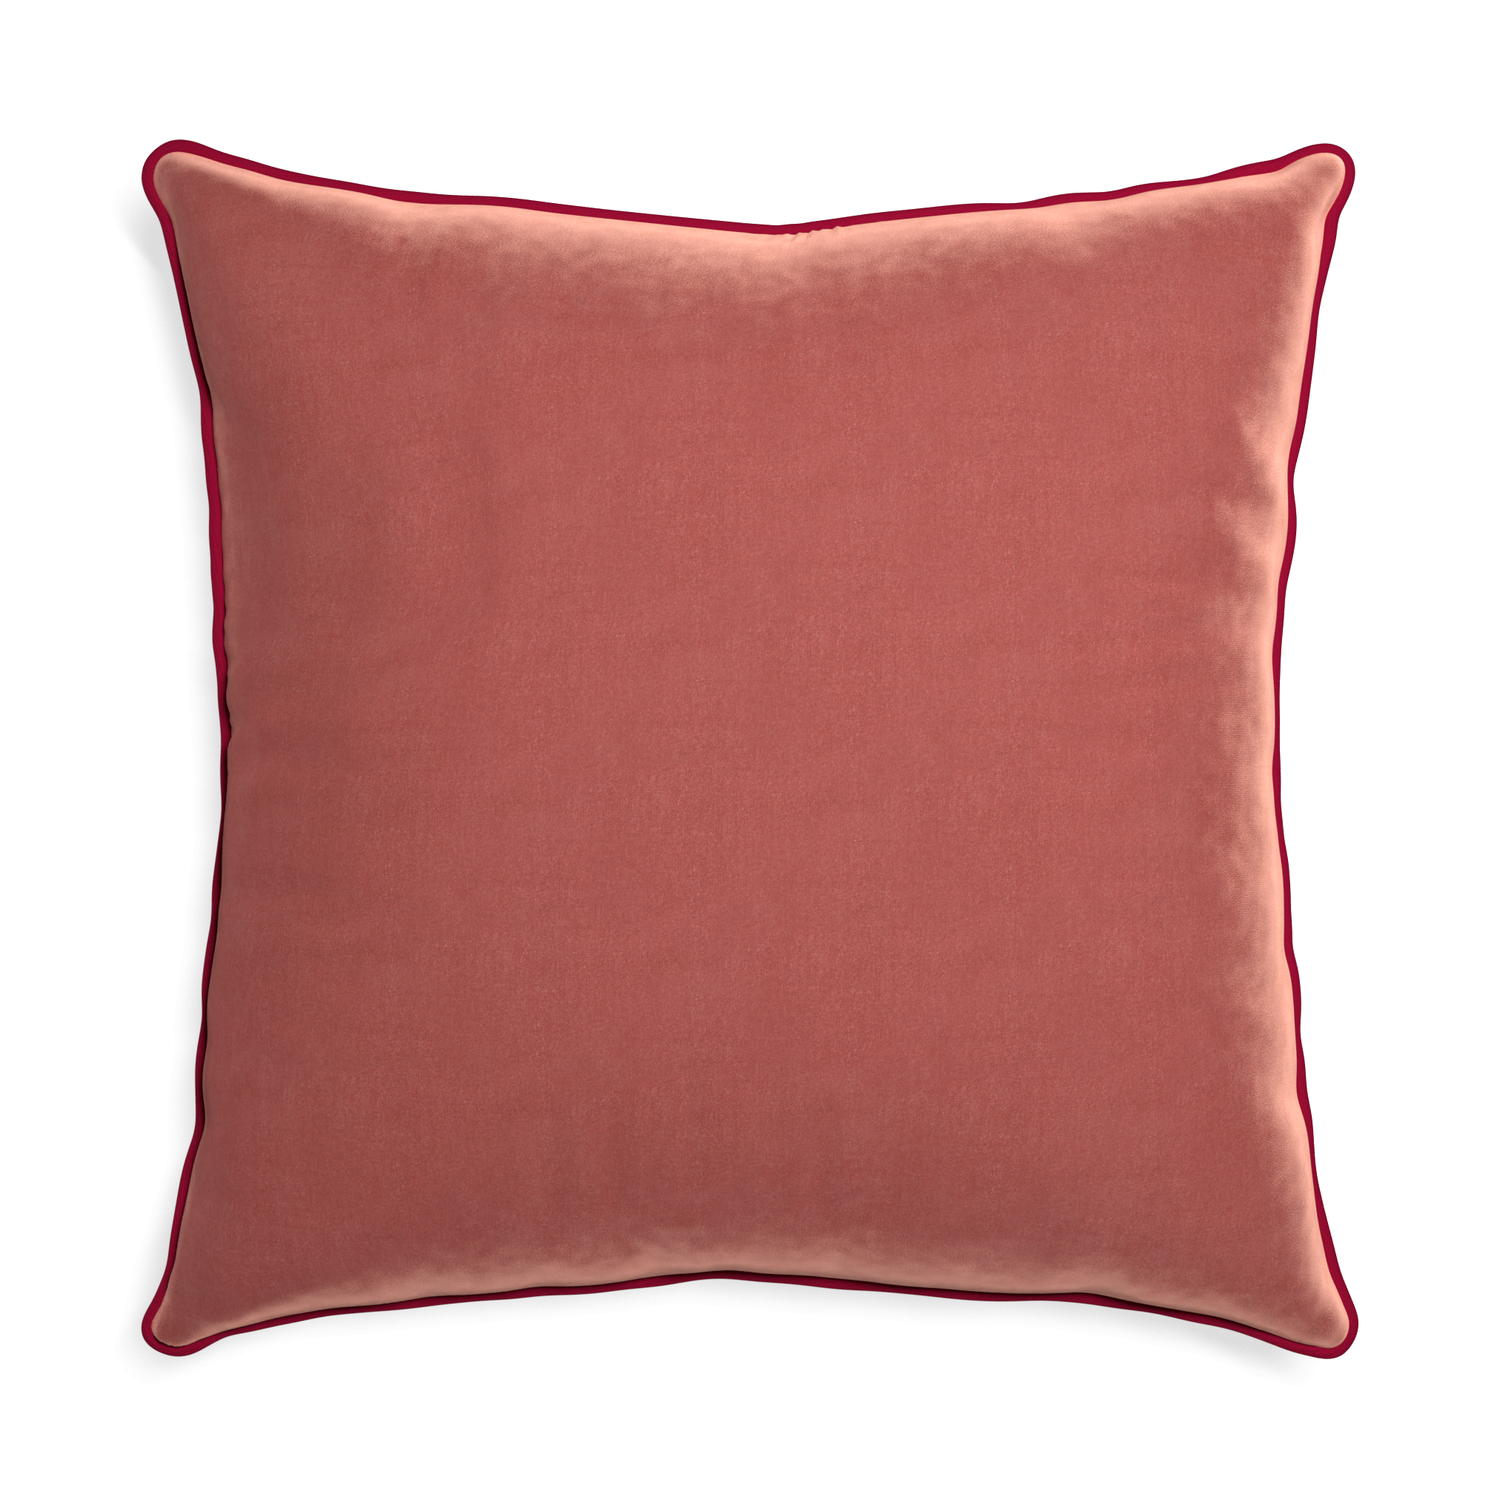 Euro-sham cosmo velvet custom pillow with raspberry piping on white background